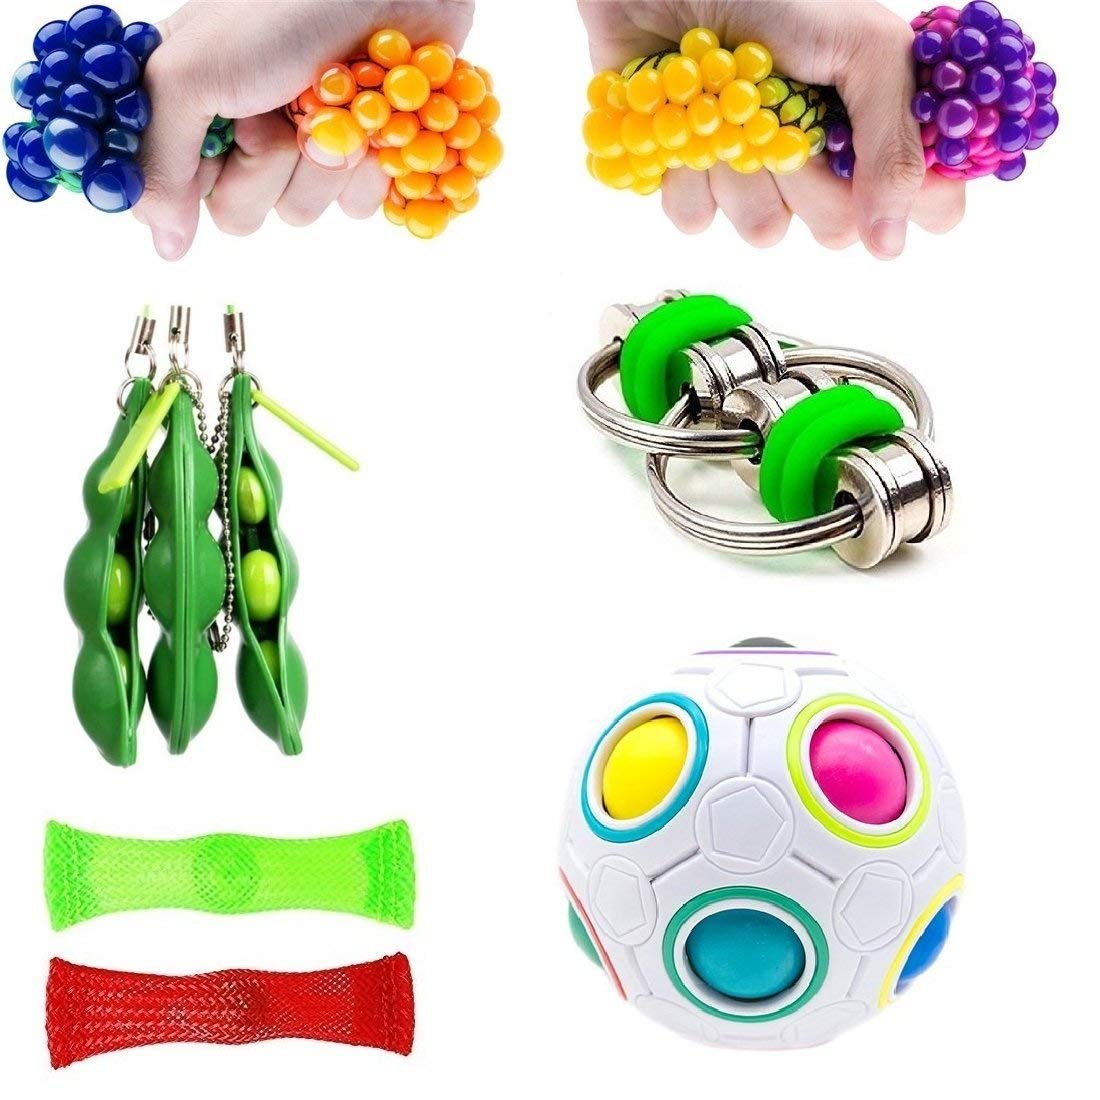 SpringFly 12 Pack Bundle Sensory Fidget Toys Set-Bike Chain,Marble Fidget Toys,Rainbow Magic Sensory Balls,Squeeze a Bean Soybeans,Mesh Squishy Grape Ball for Stress Relax